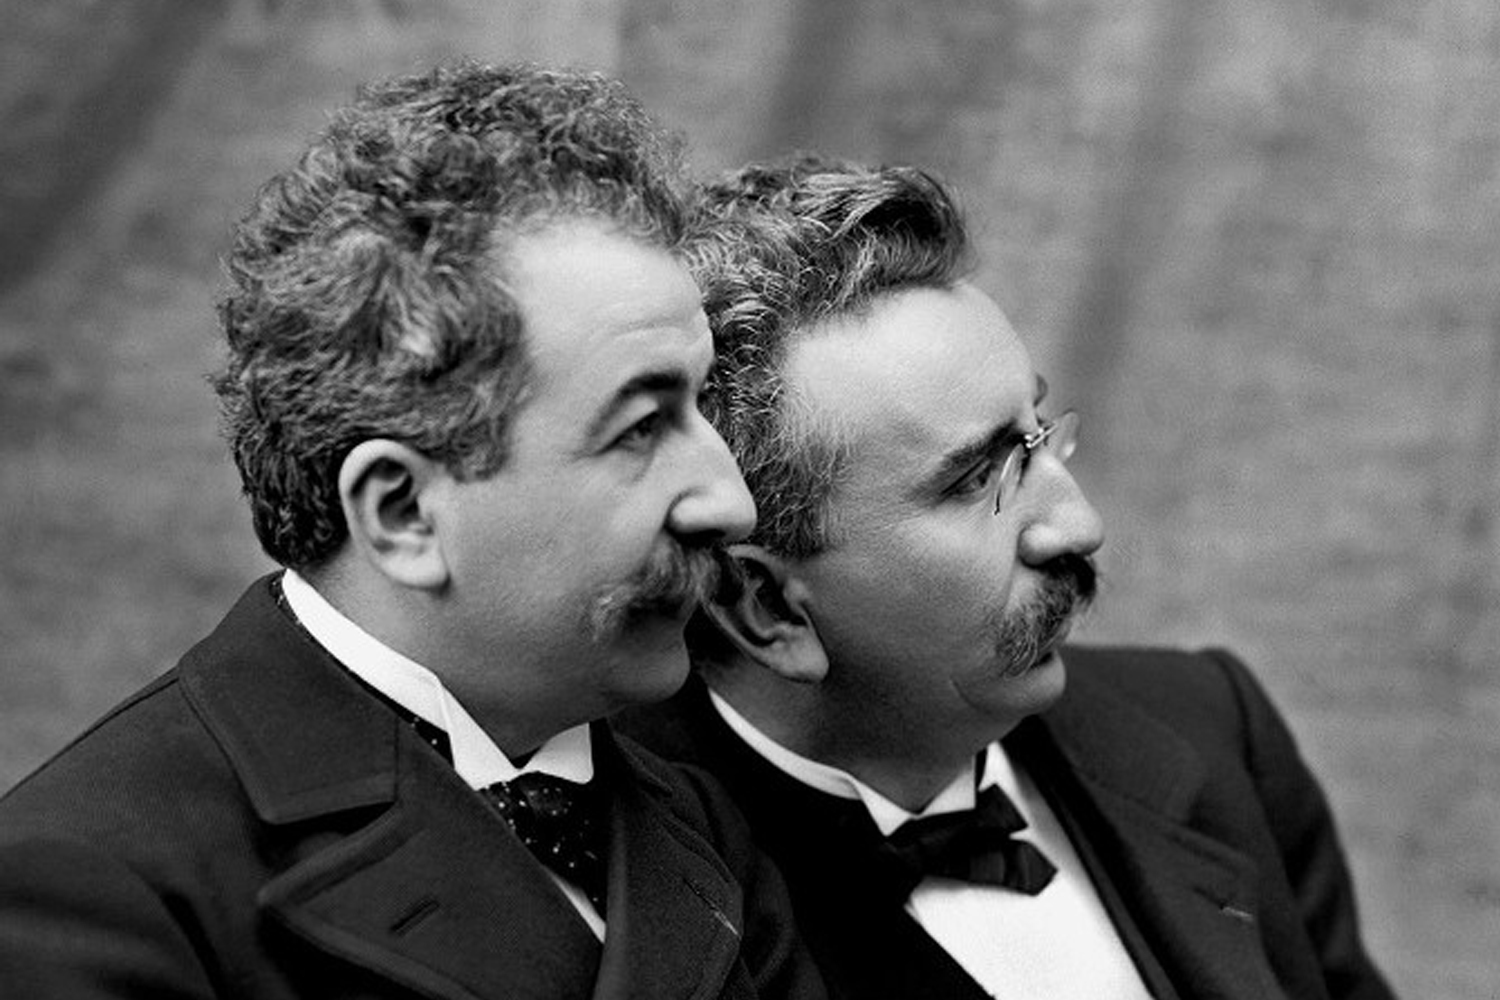 La nascita del Cinema: dai fratelli Lumière alle avanguardie